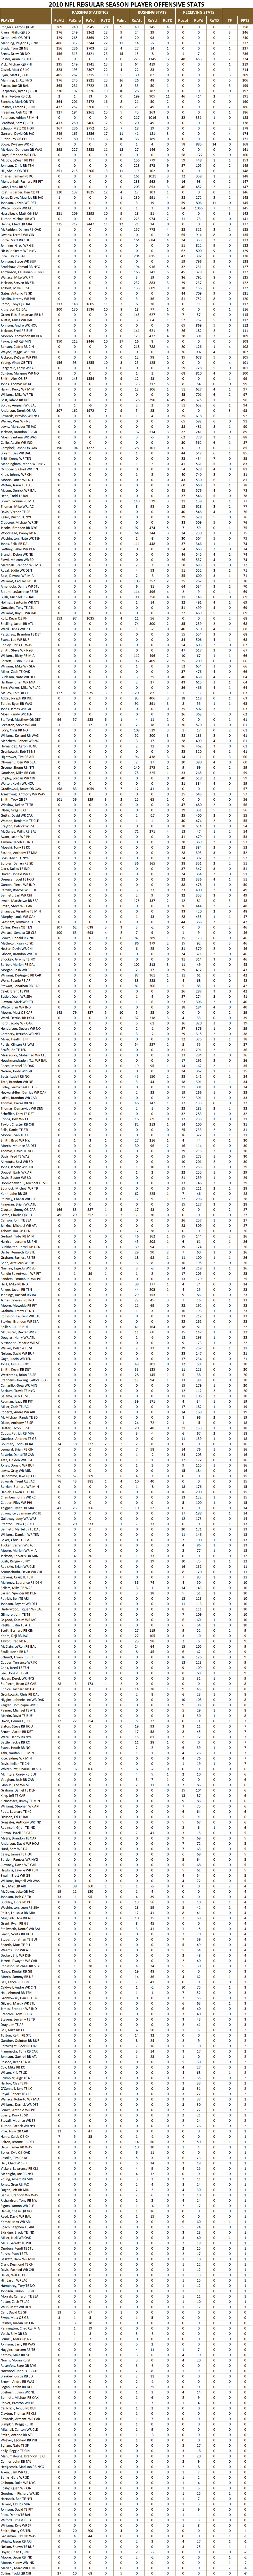 2010 National Football League Pool Season Player Offensive Stats